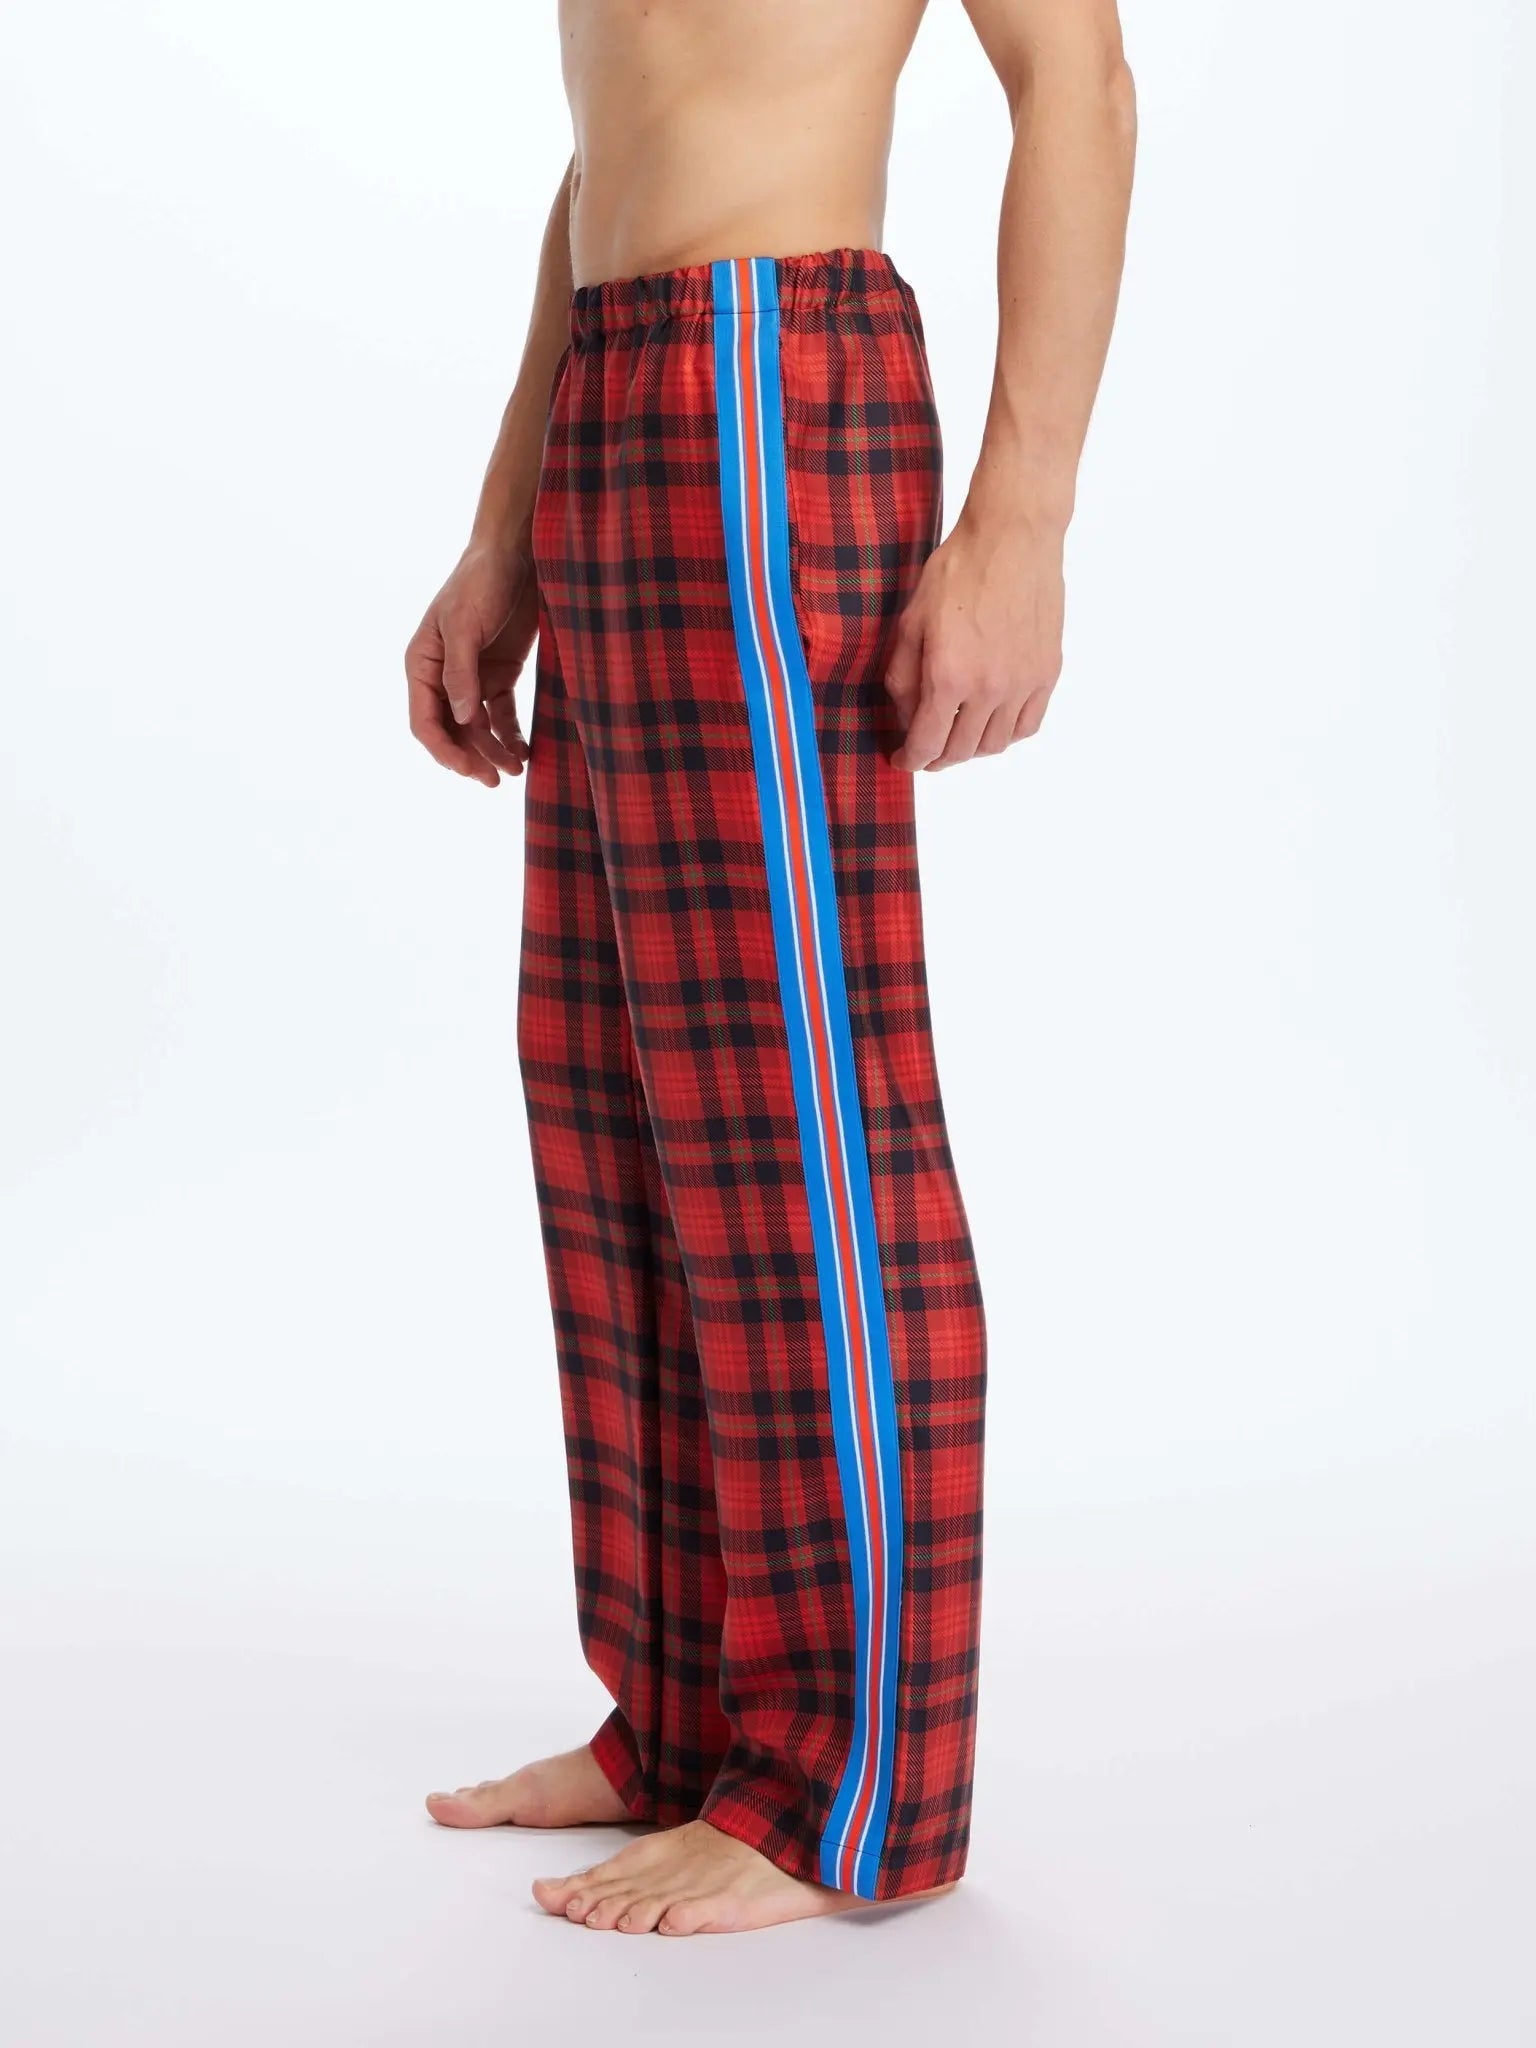 Ollabaky Christmas Red Tartan Plaid Pajama Pants for Men Pajama Bottoms  Sleep Lounge Pj Pants at  Men's Clothing store